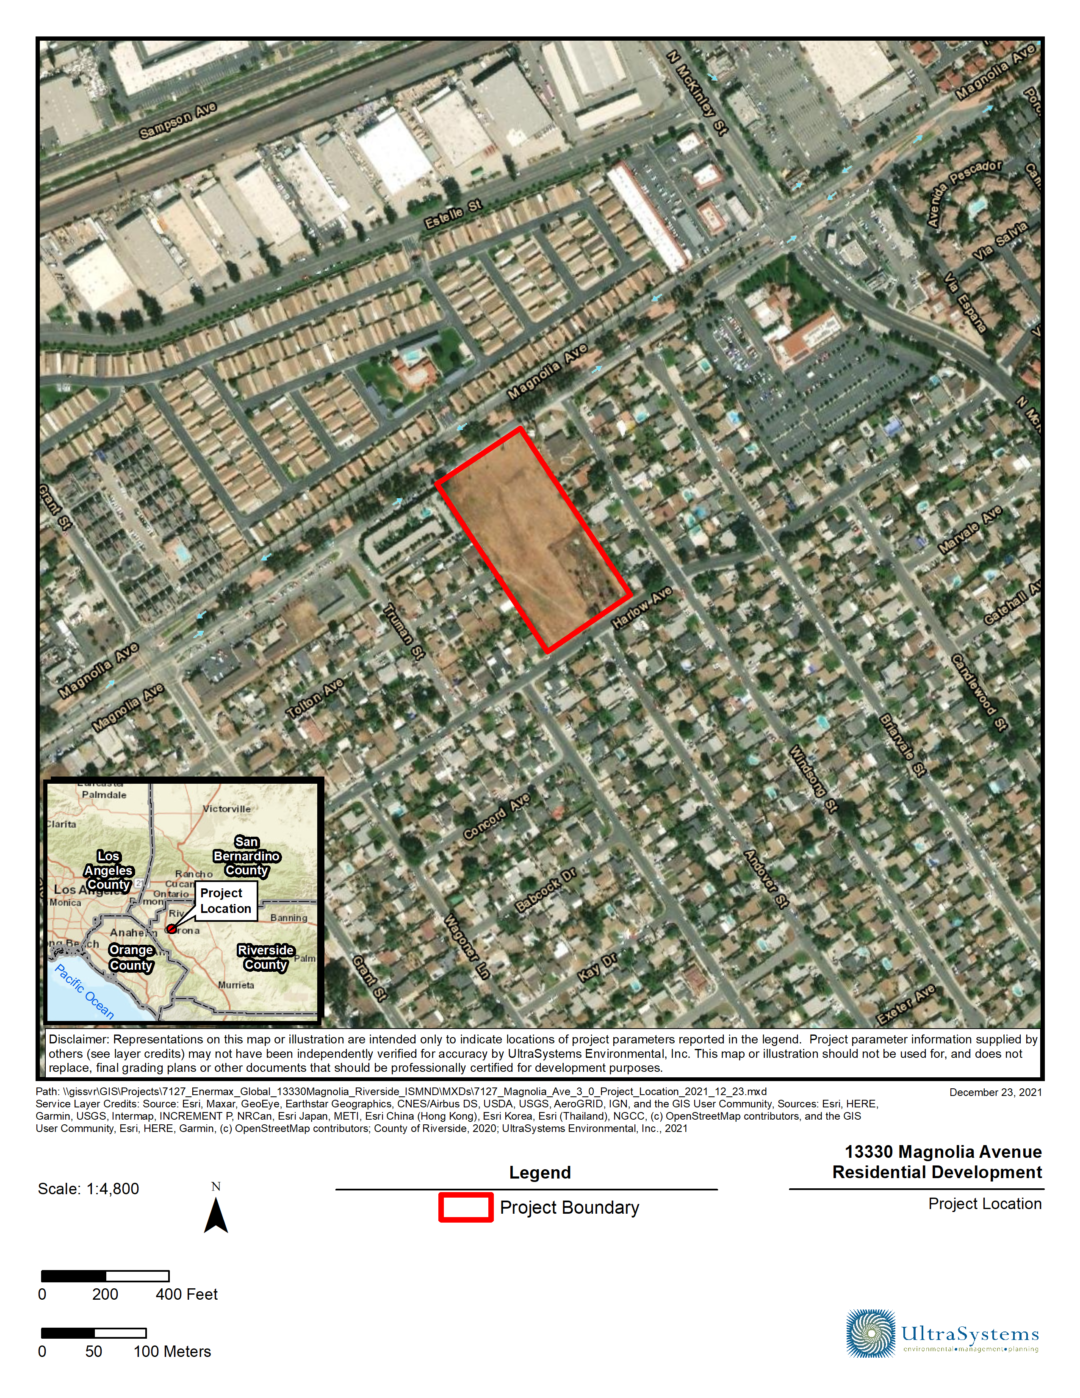 13330 Magnolia Avenue Residential Development – IS-MND